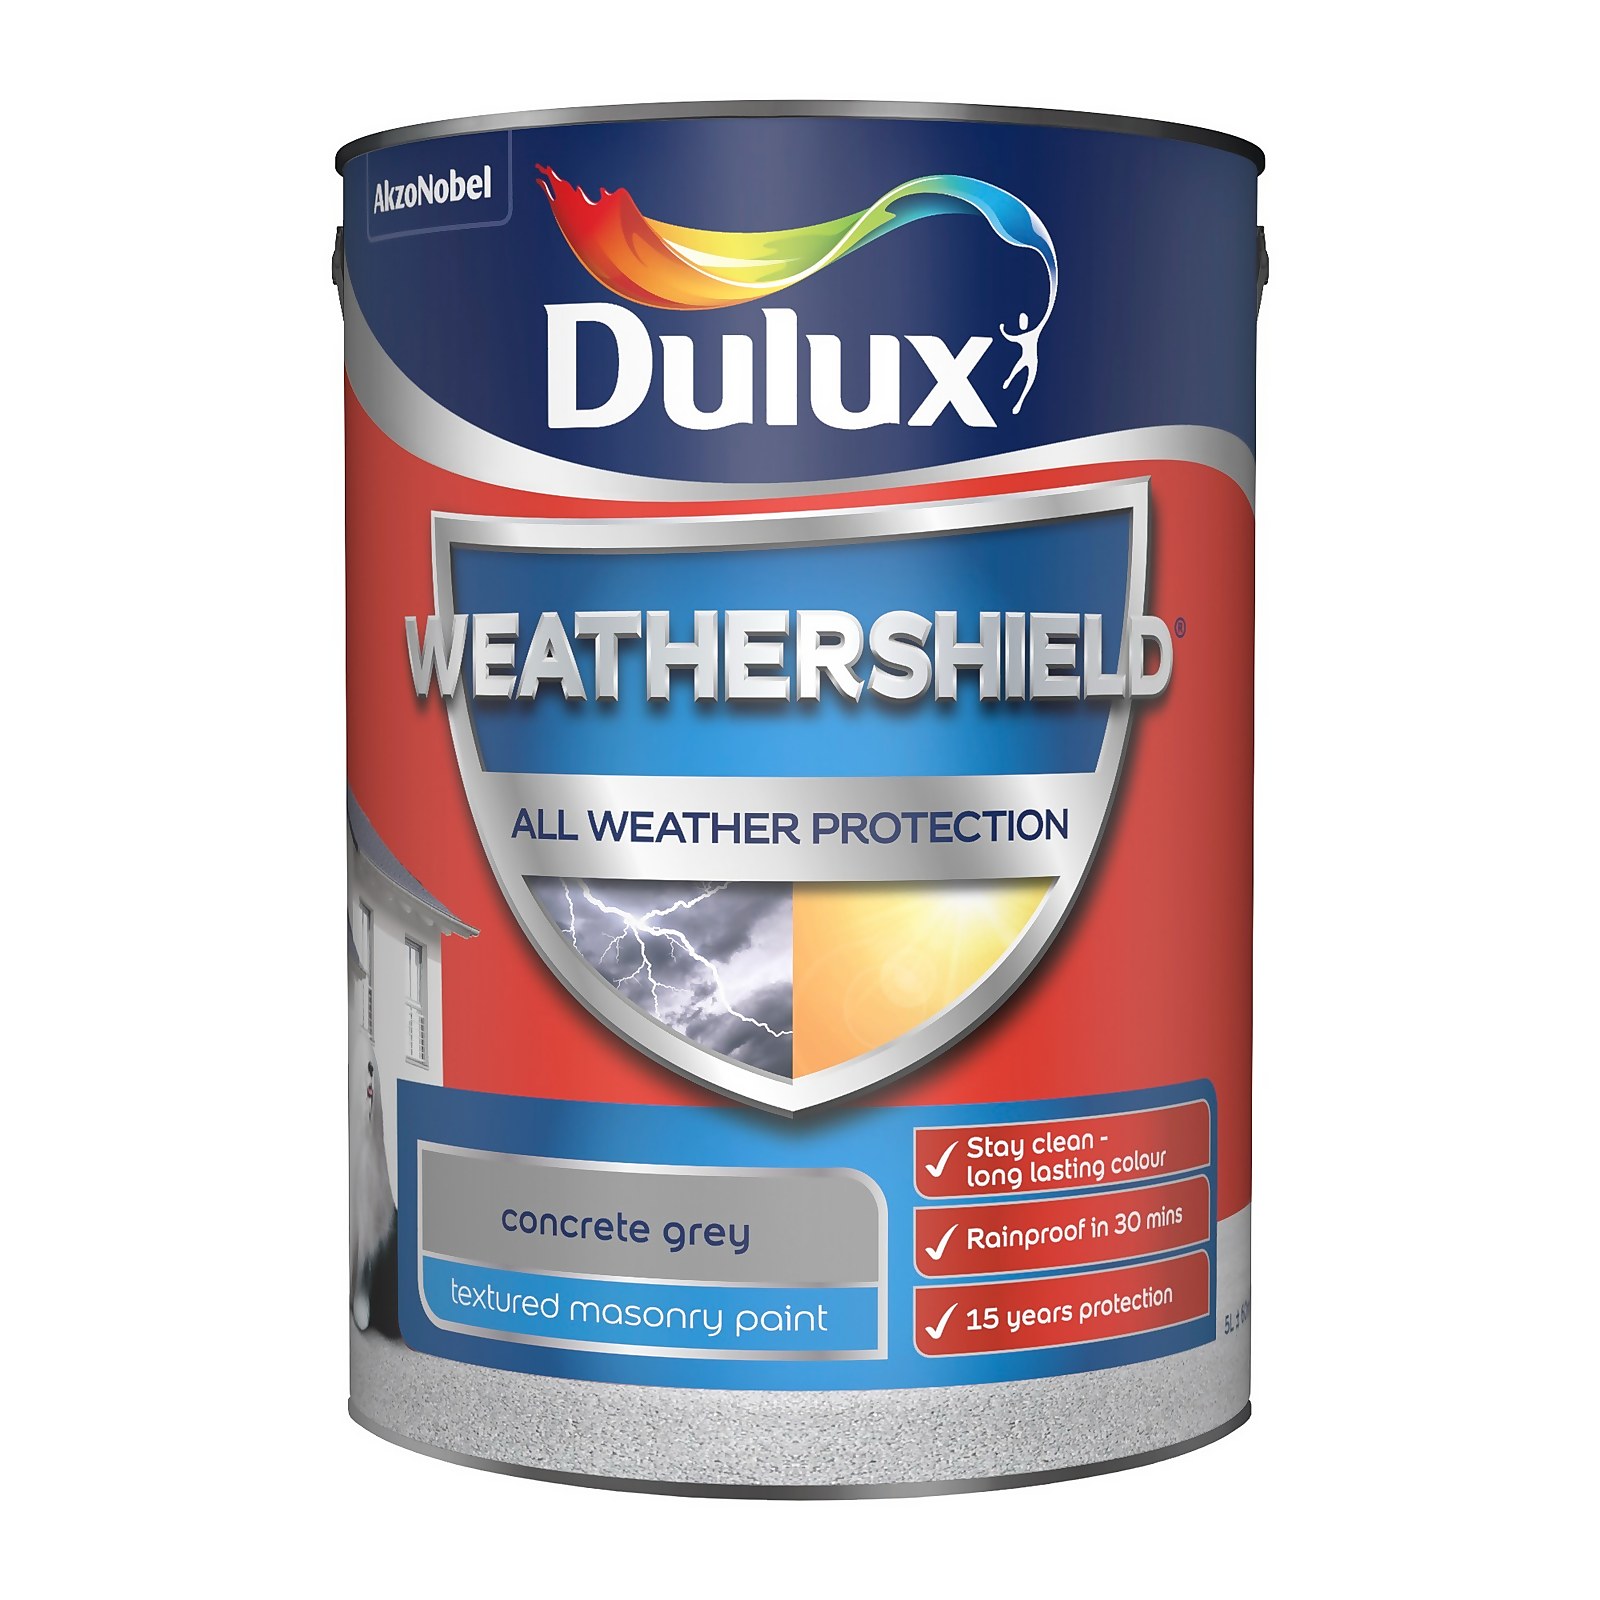 Photo of Dulux Weathershield Textured Masonry Paint - Concrete Grey - 5l